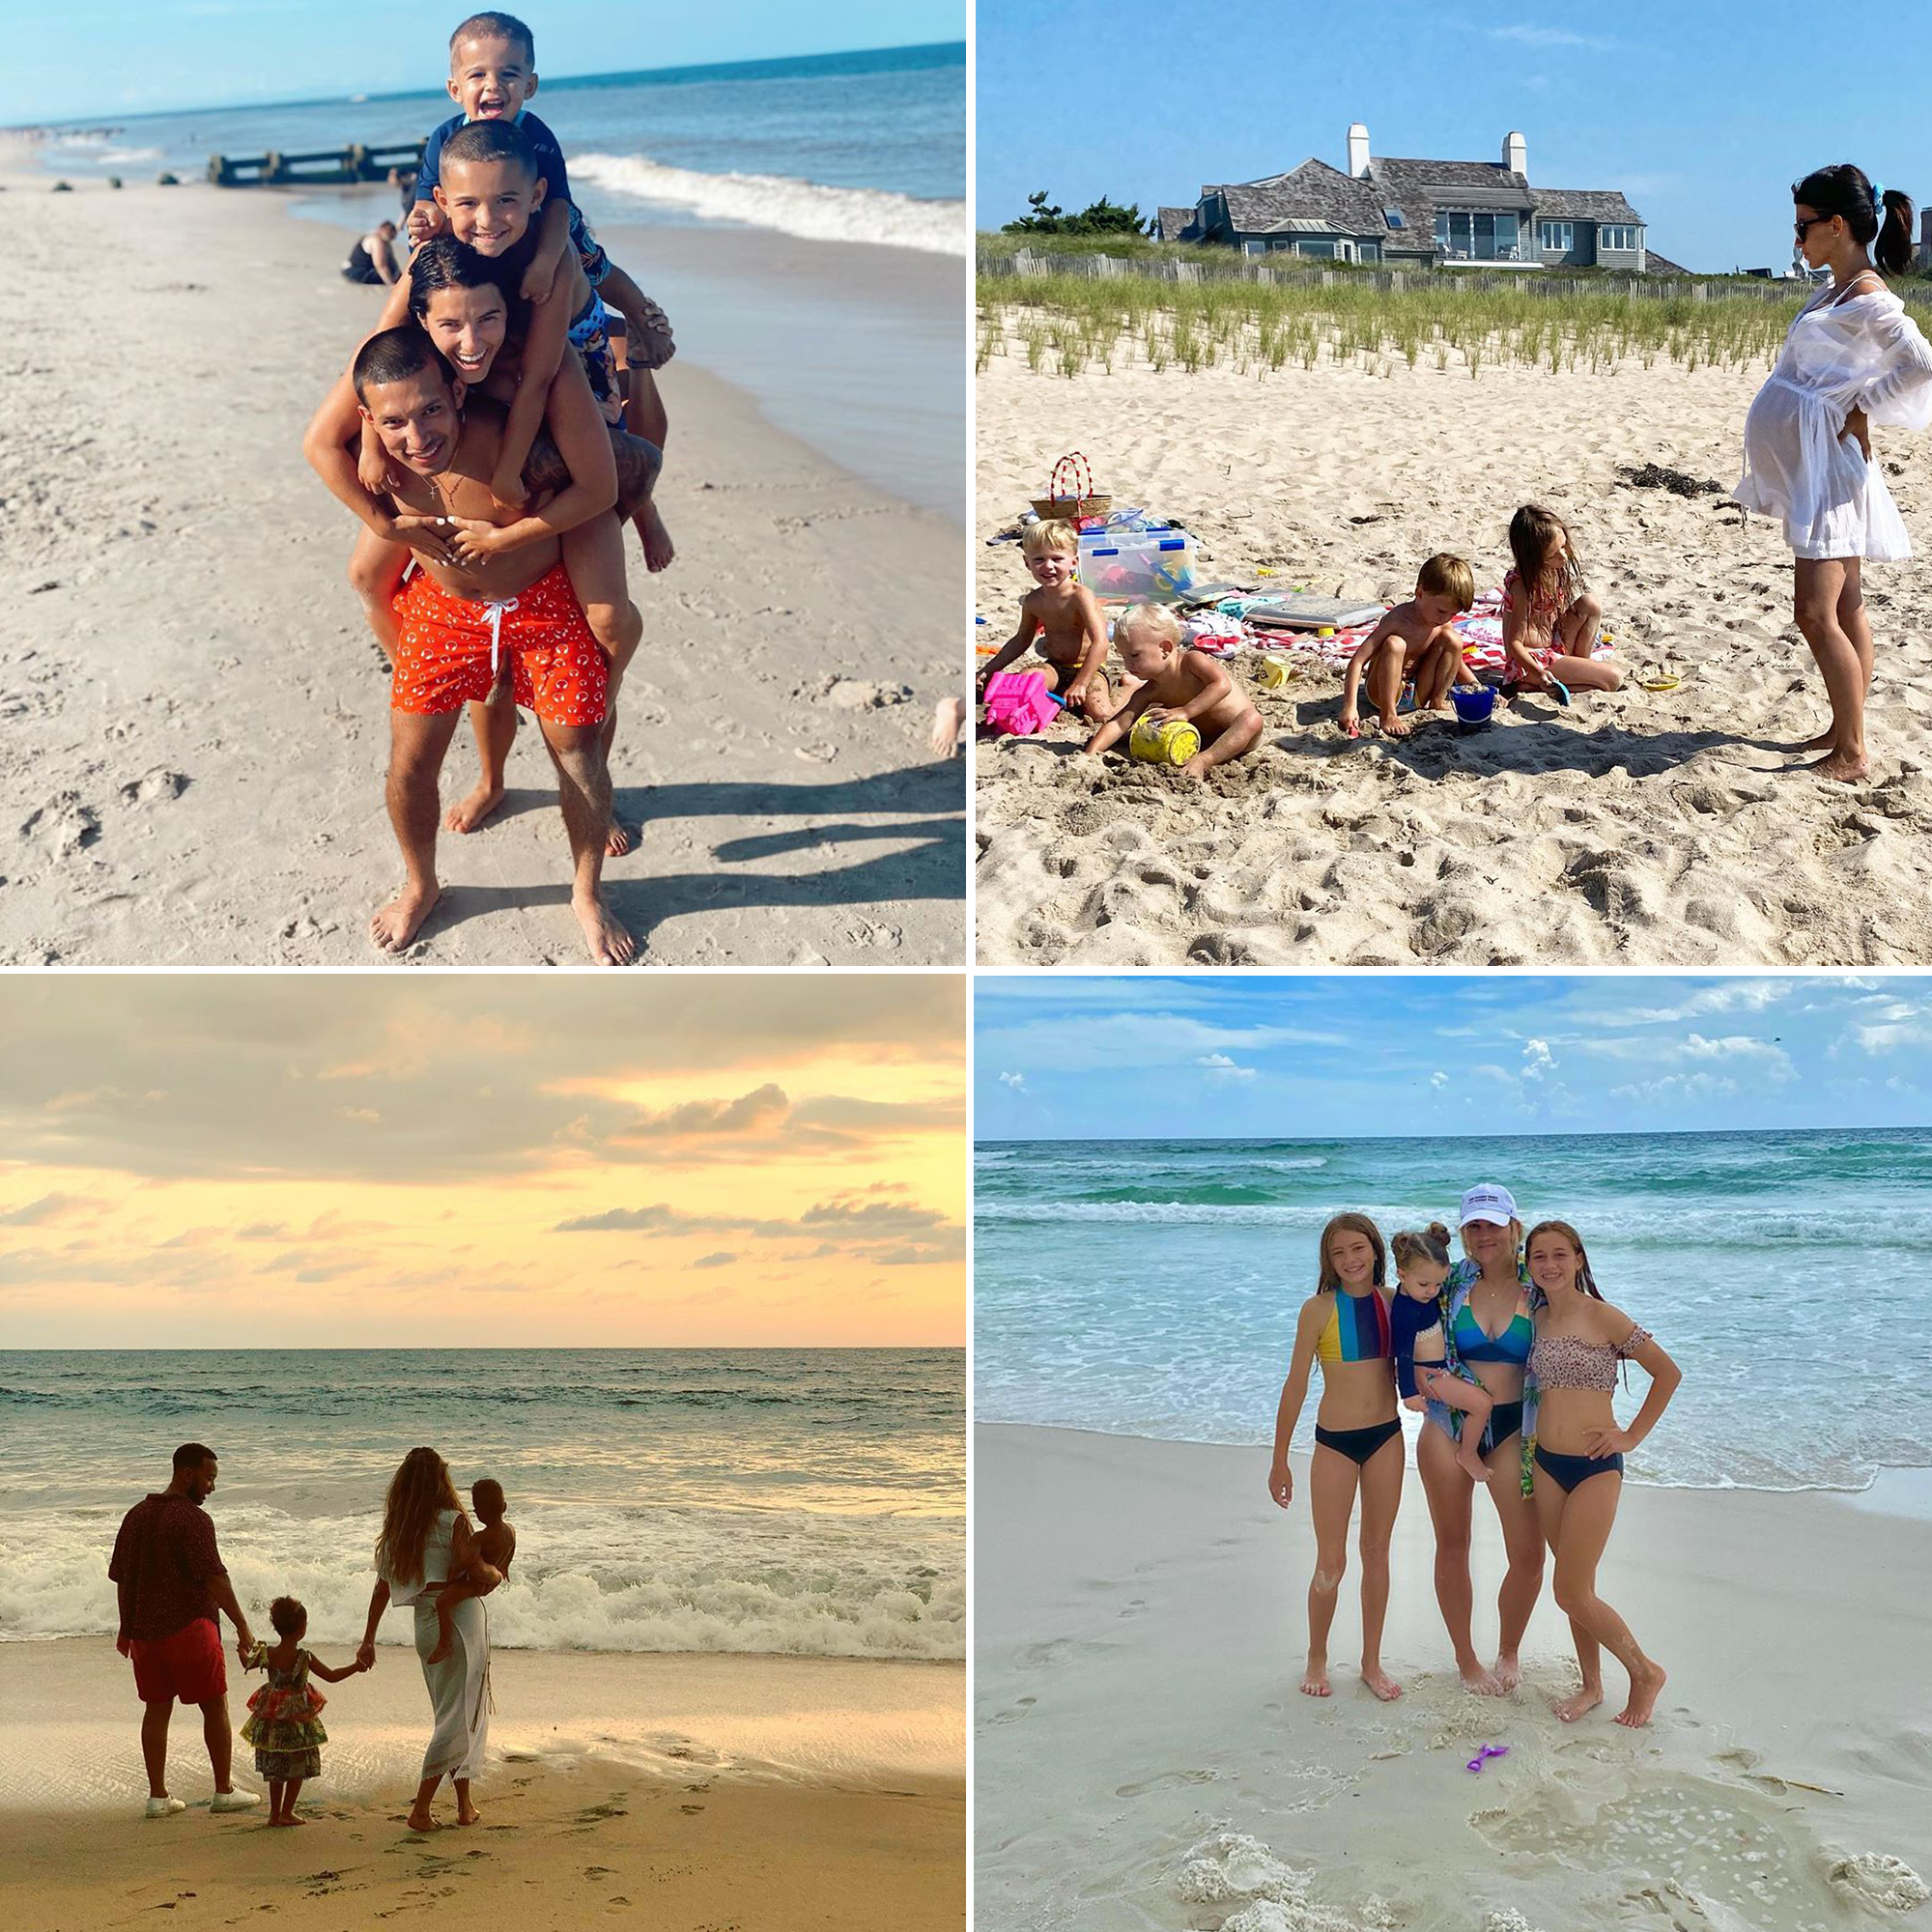 Gallery Nudism Vacation - Celeb Families' Beach Trips Amid Coronavirus Pandemic: Pics